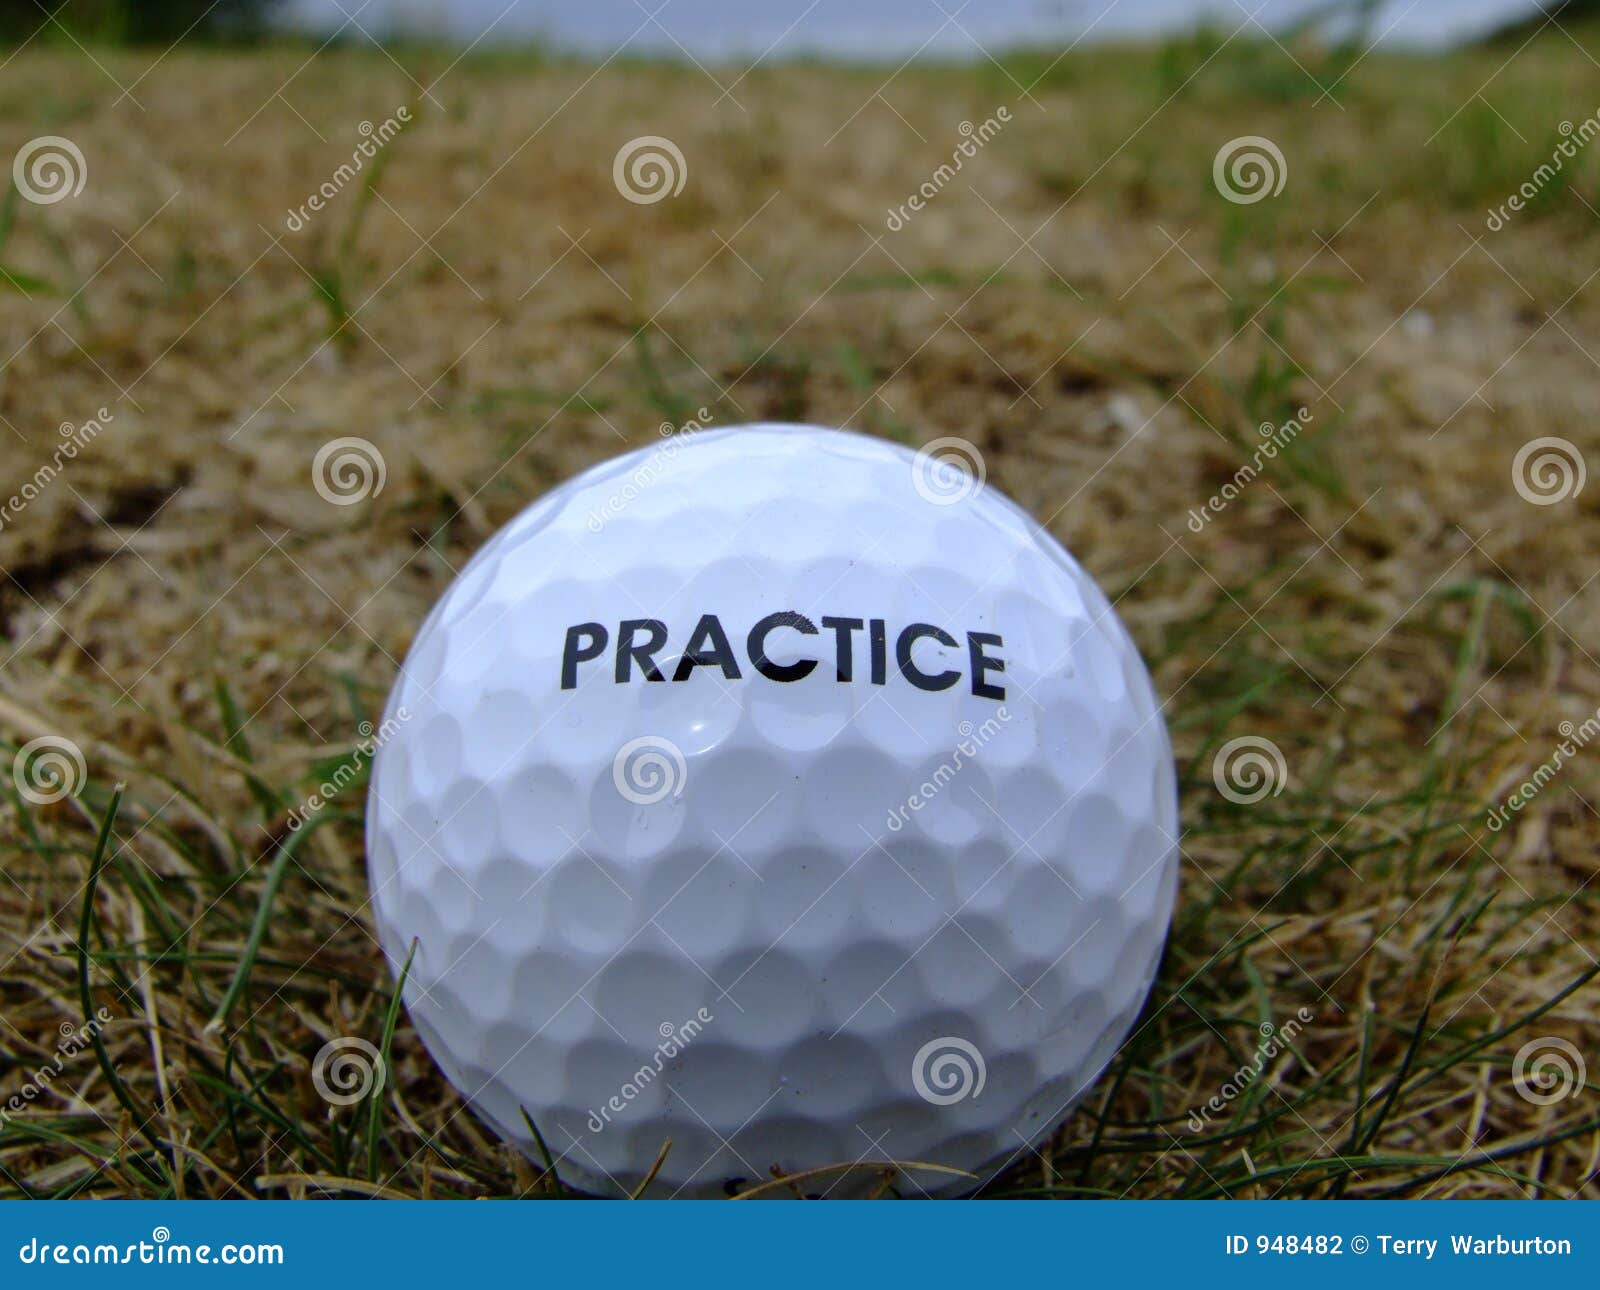 golf practice ball